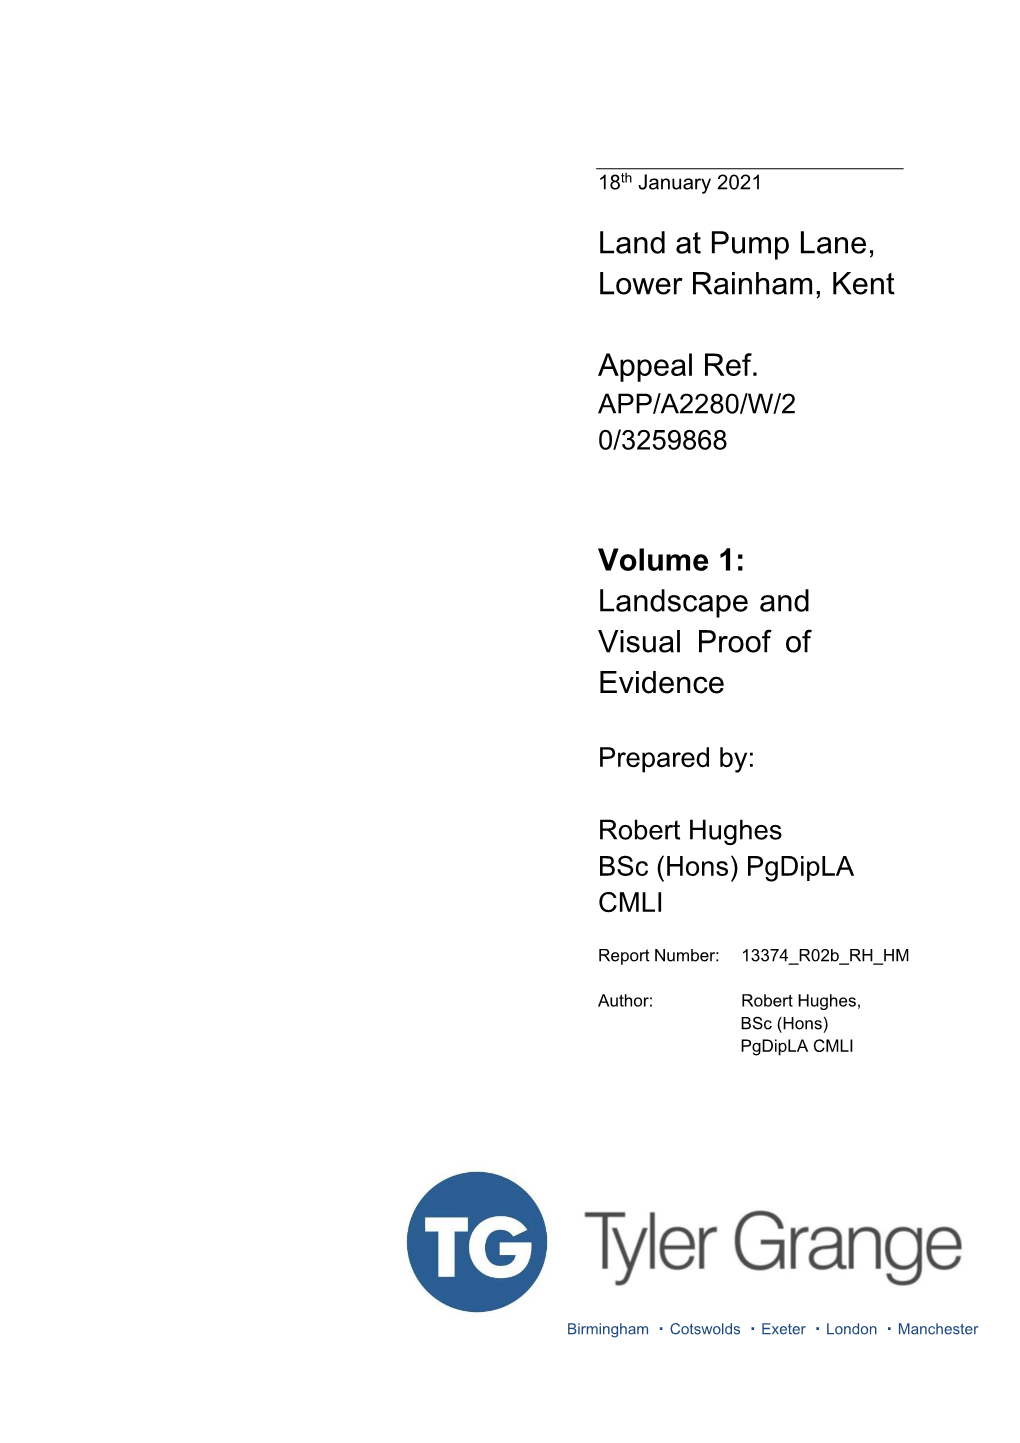 Land at Pump Lane, Lower Rainham, Kent Appeal Ref. Volume 1